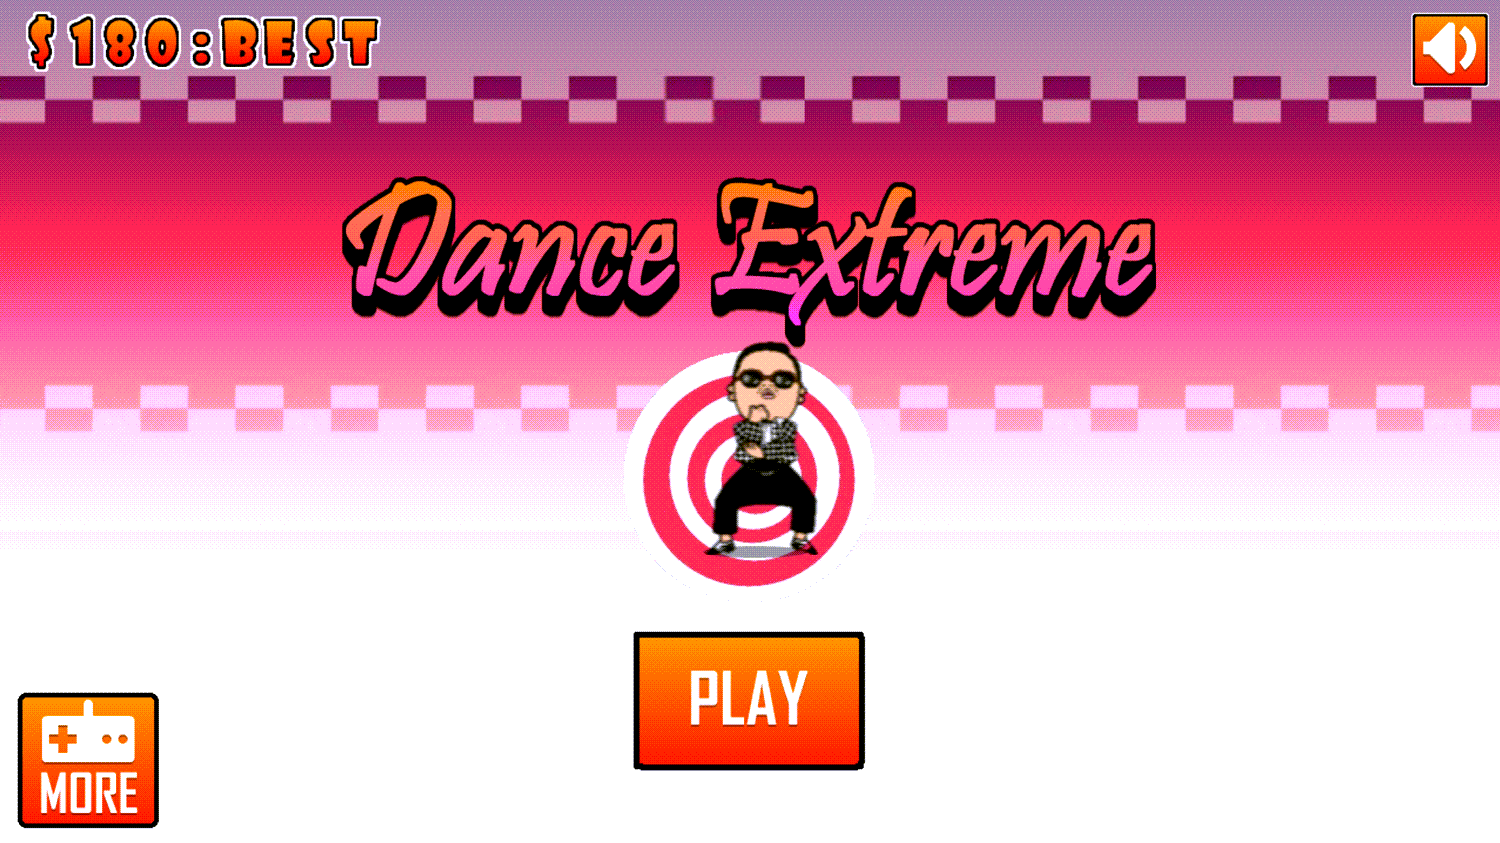 Dance Extreme Welcome Screen Screenshot.